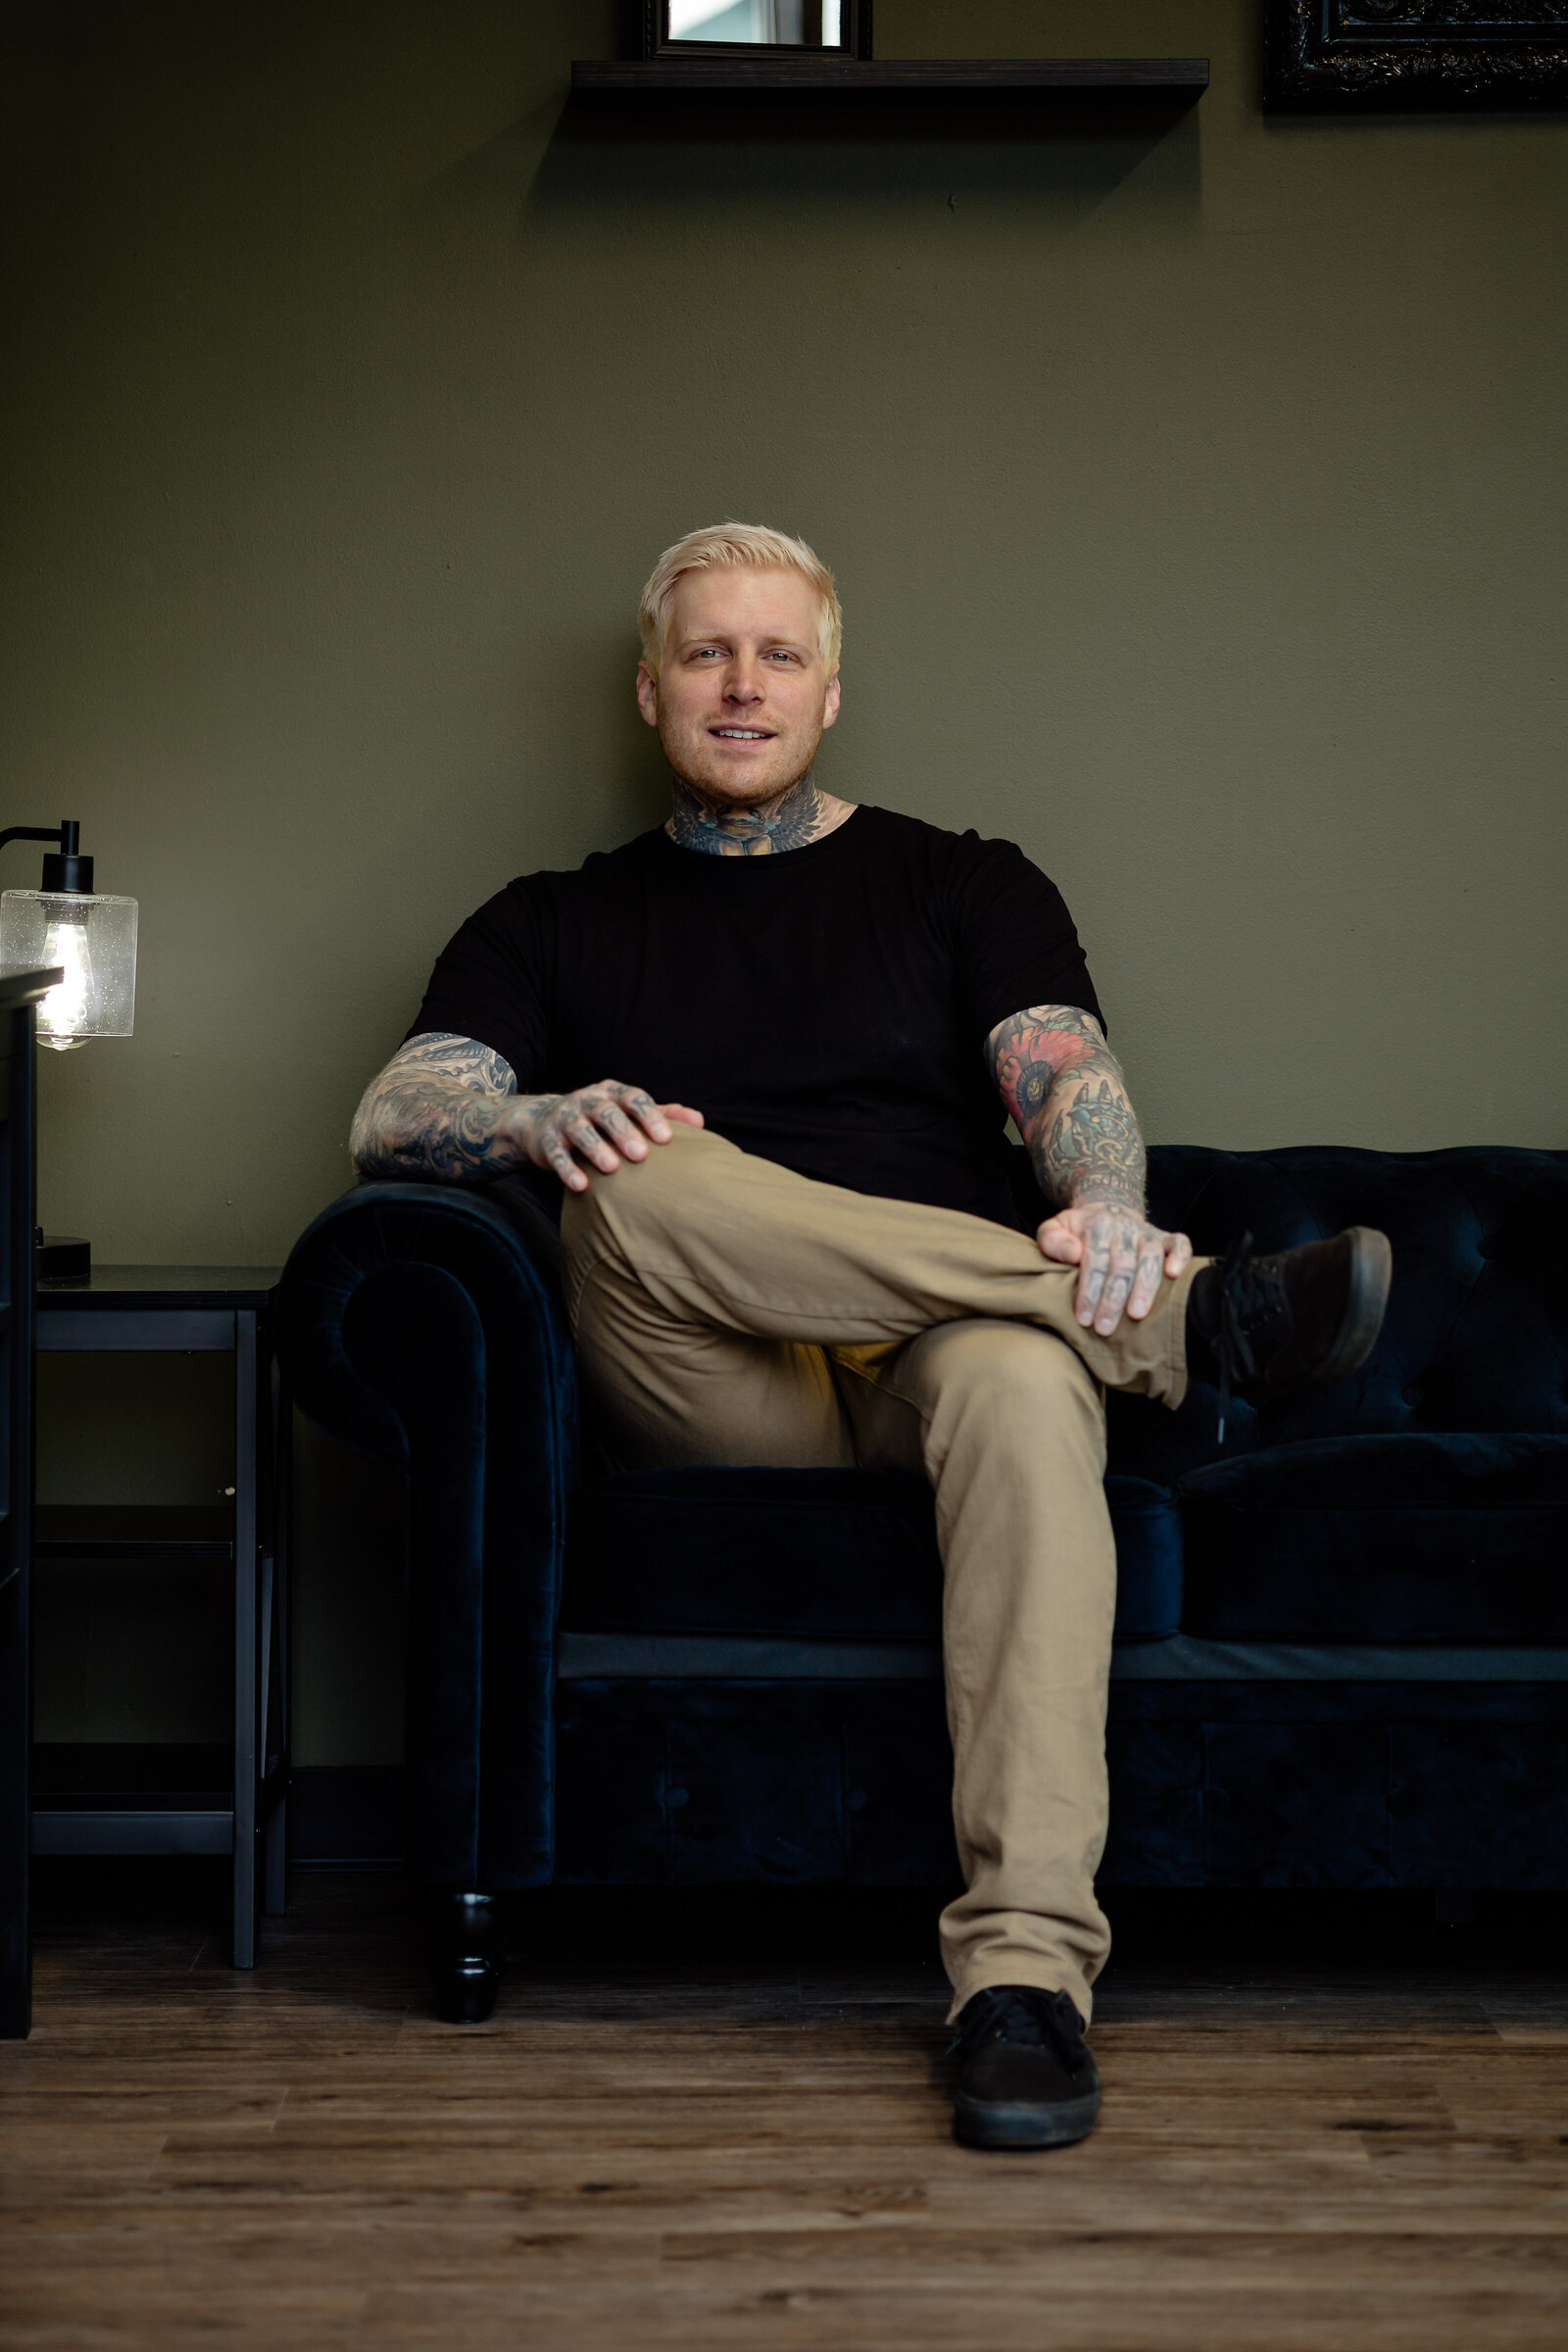 Seattle Tattoo Artist Branding Photos